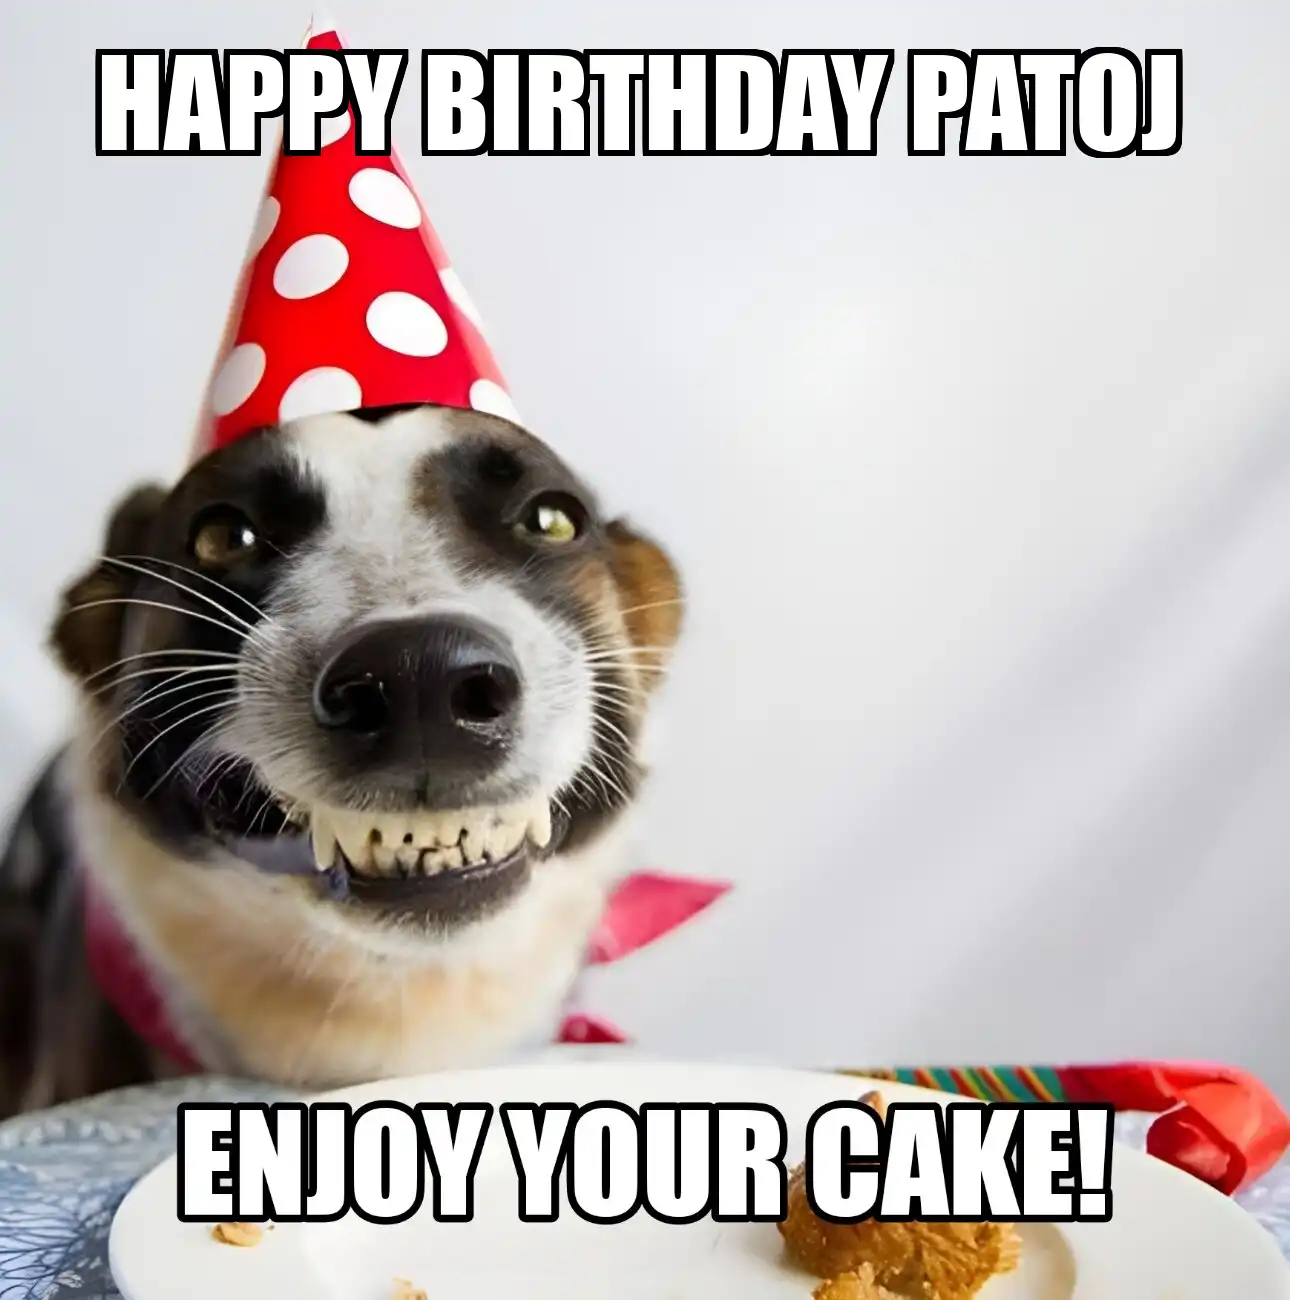 Happy Birthday Patoj Enjoy Your Cake Dog Meme